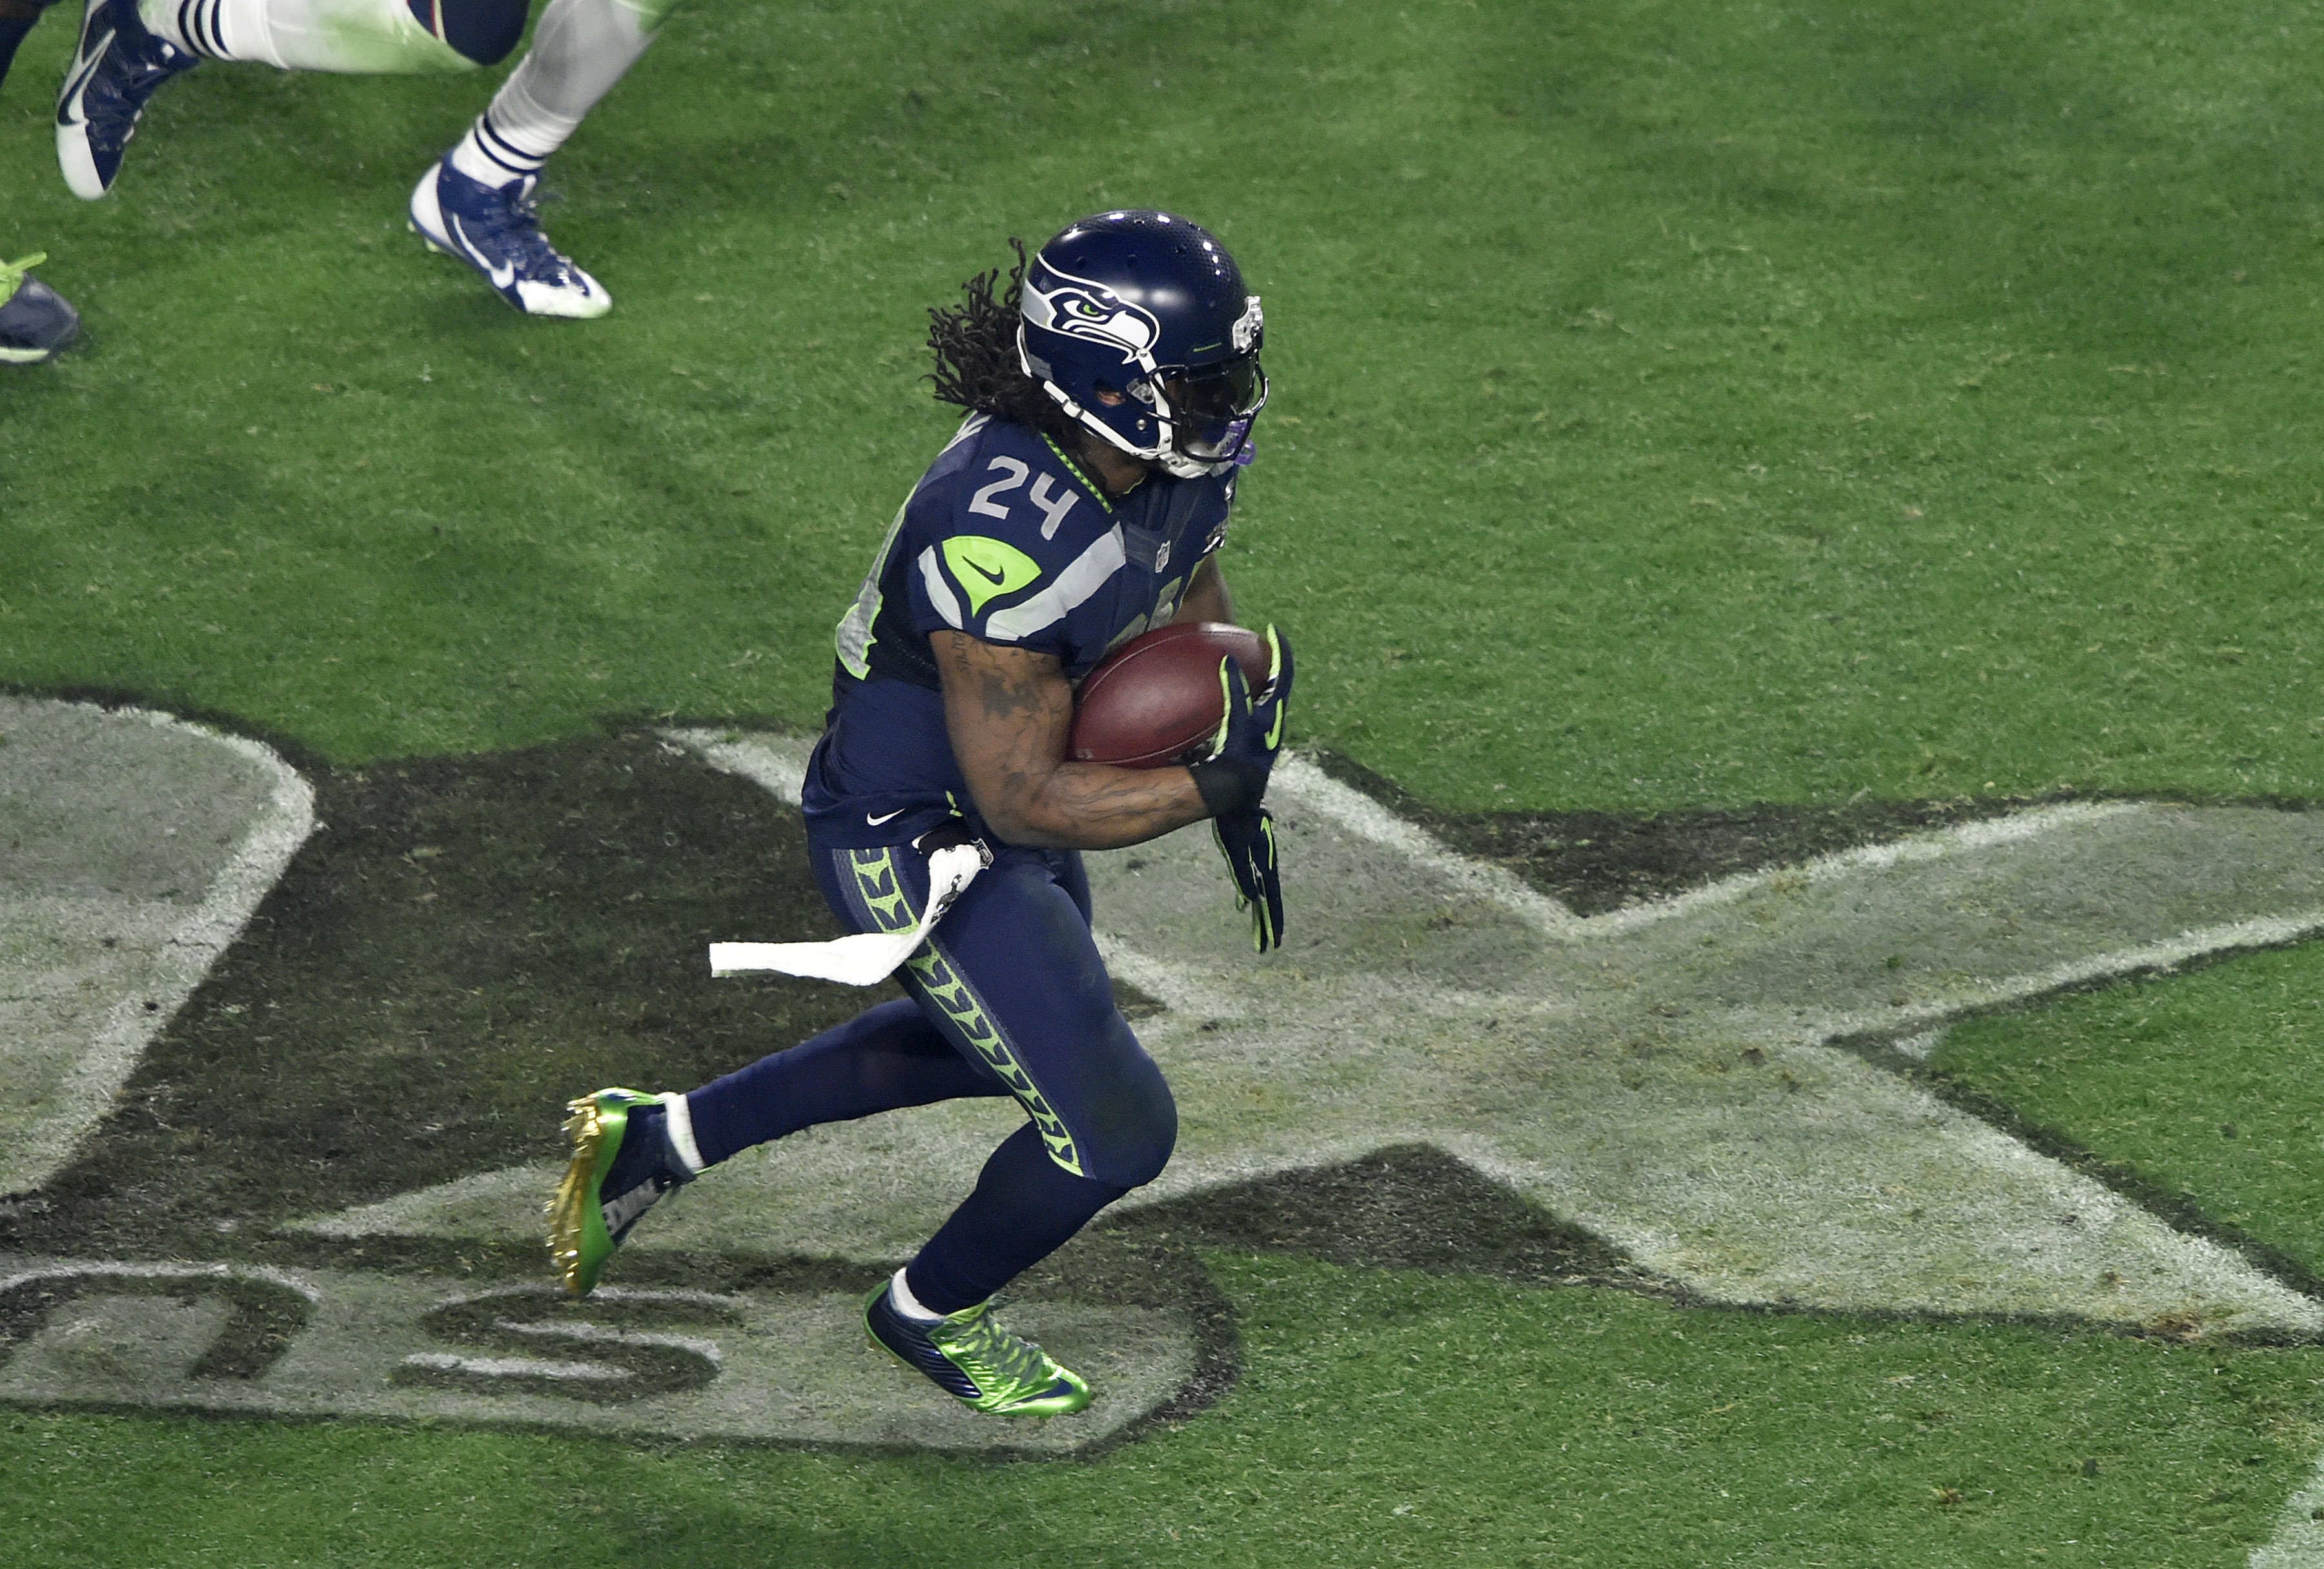 Marshawn Lynch runs the ball on the Super Bowl logo